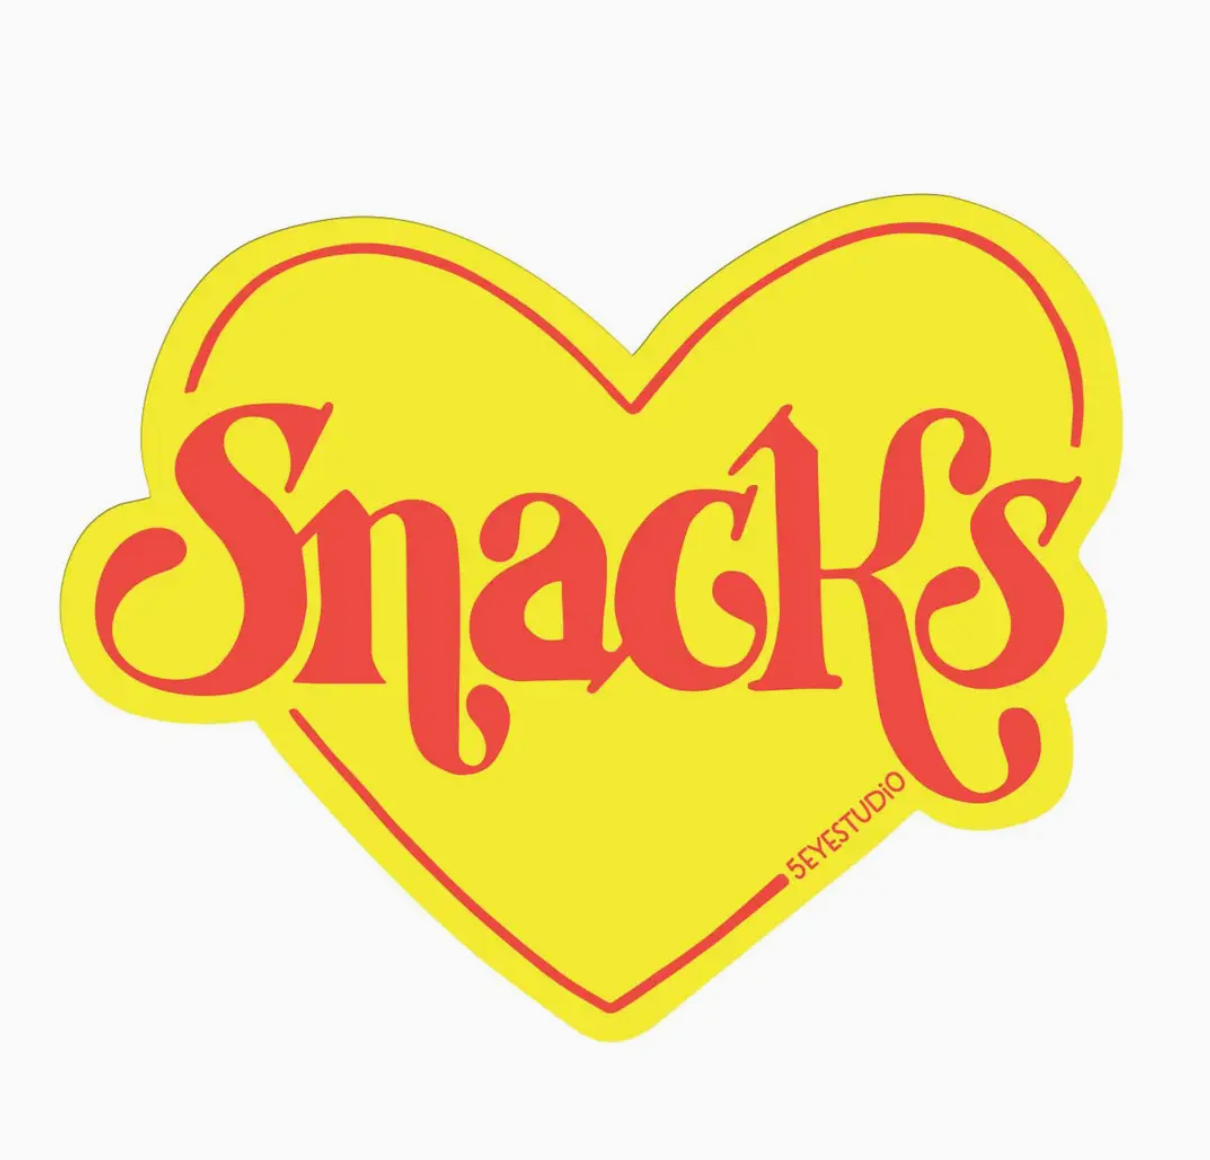 Snacks Sticker